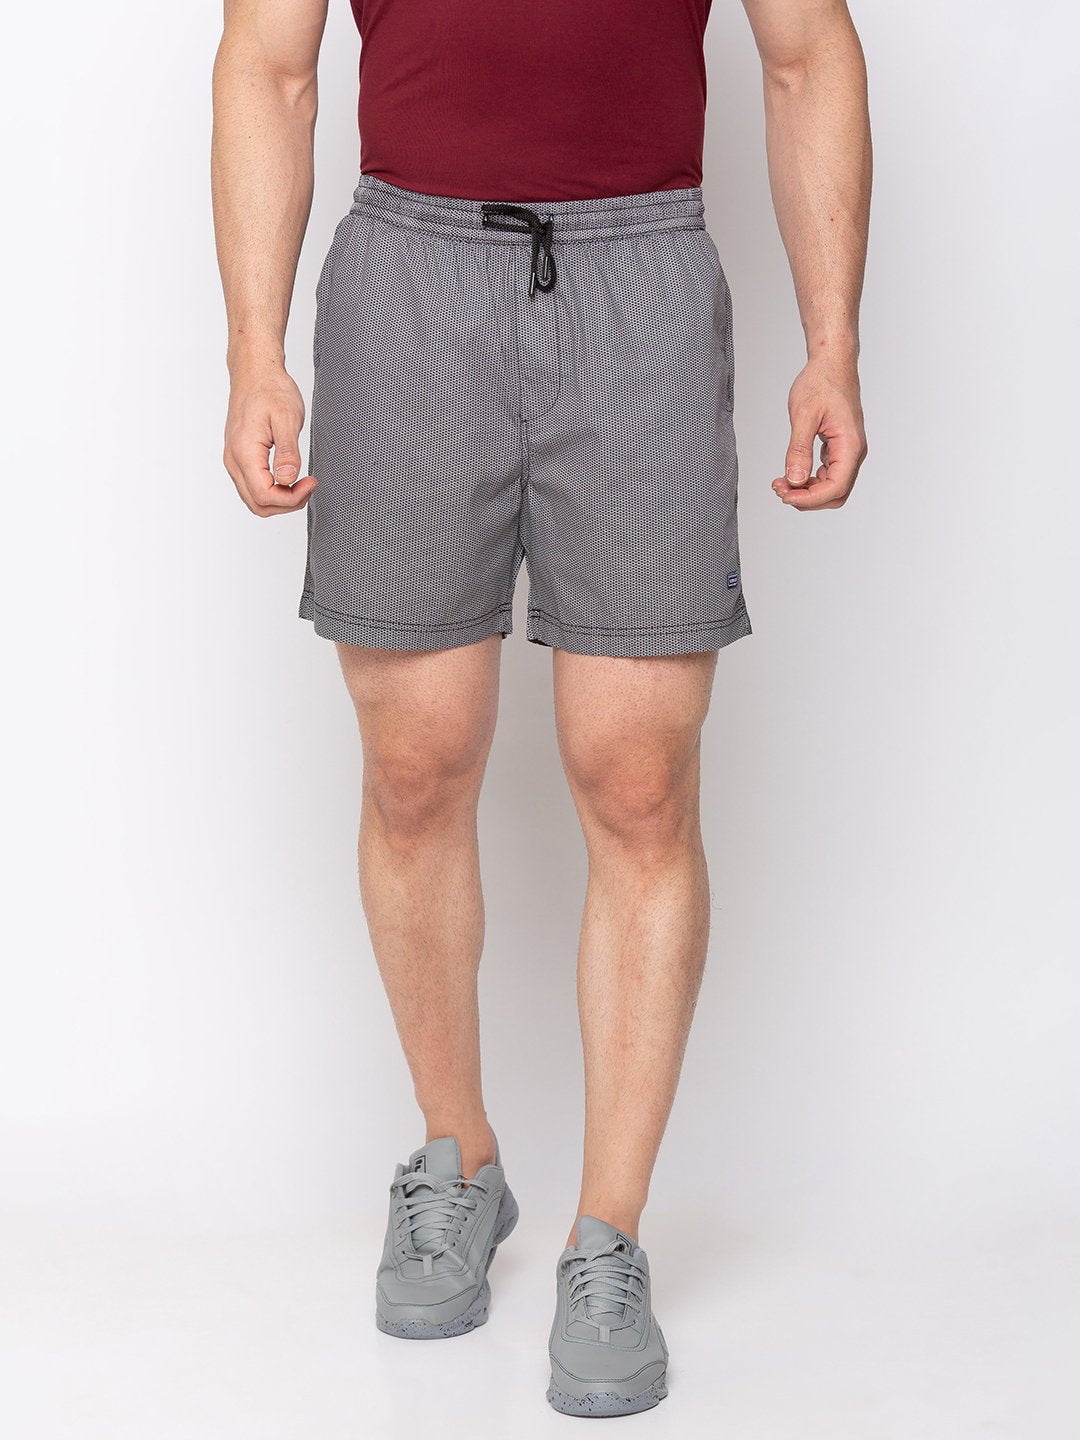 Status Quo |Printed Regular Fit Shorts - S, M, L, XL, XXL